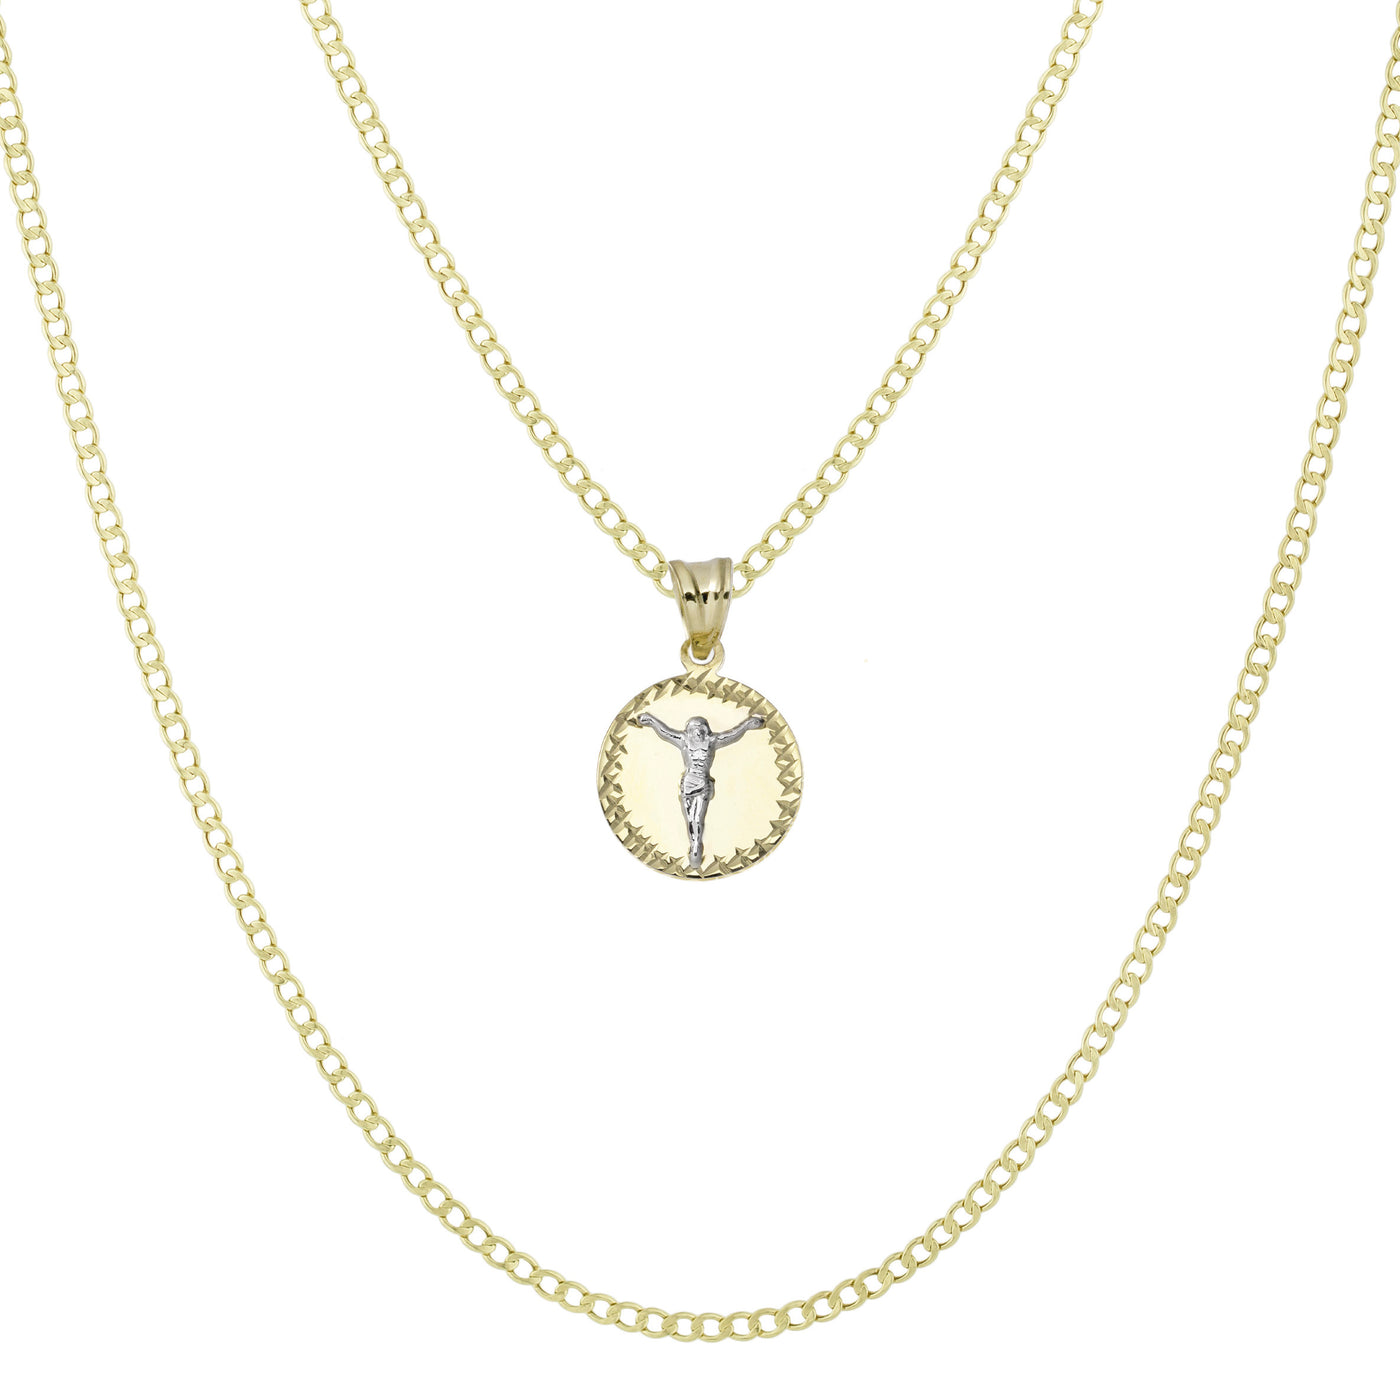 1" Jesus Christ Crucifix Medallion Pendant & Chain Necklace Set 10K Yellow White Gold